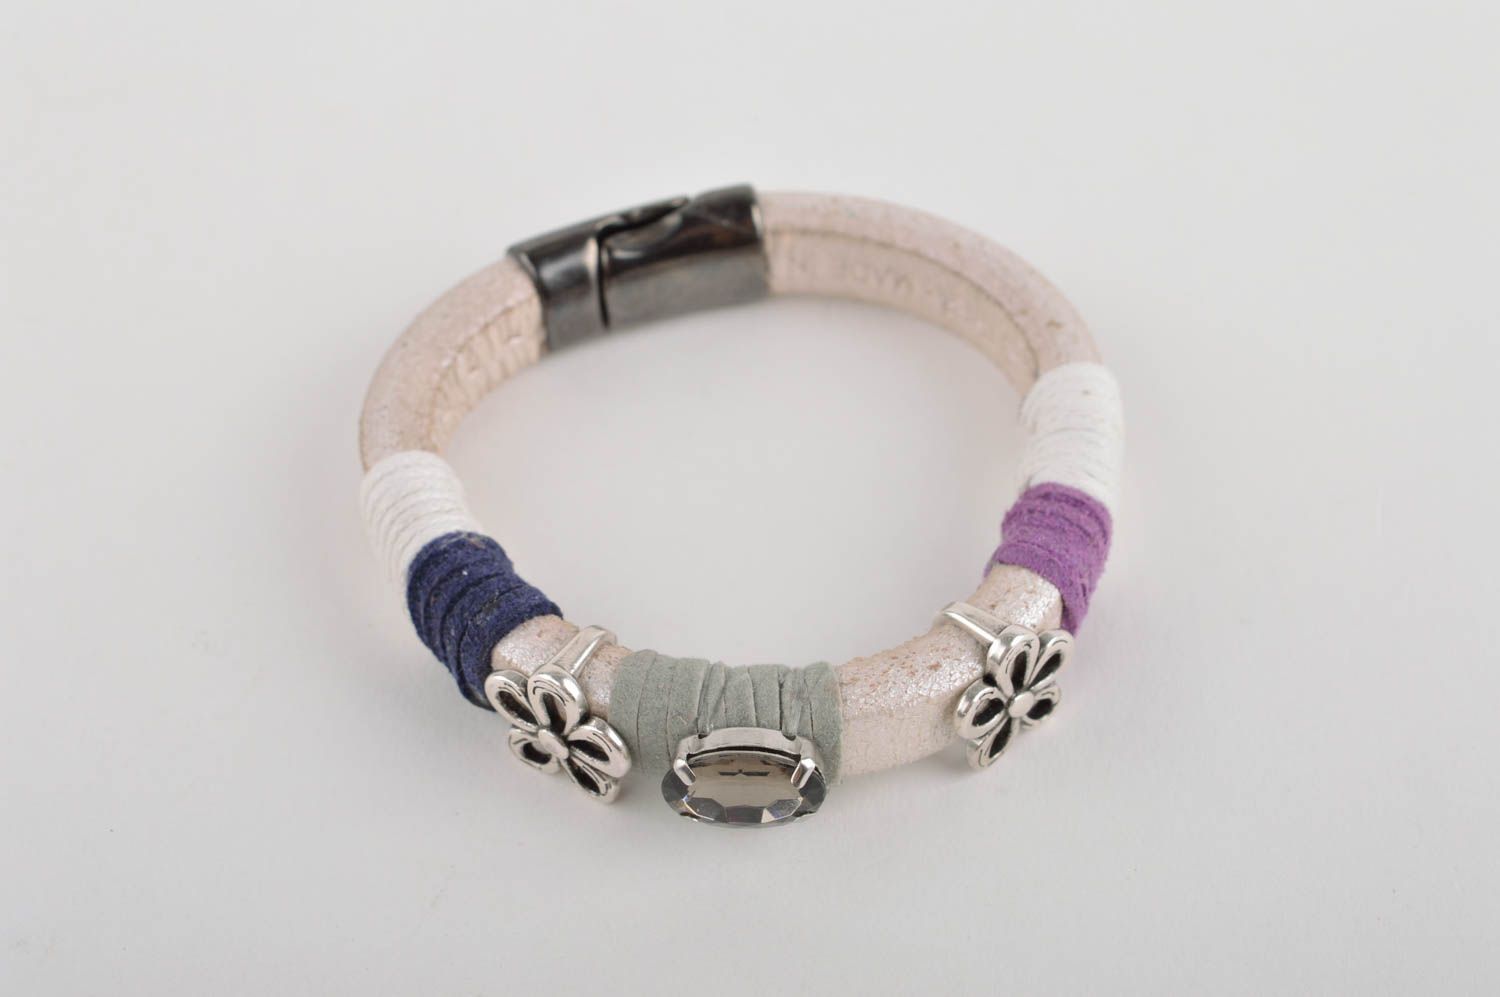 Stylish handmade leather bracelet designs leather goods fashion trends photo 2